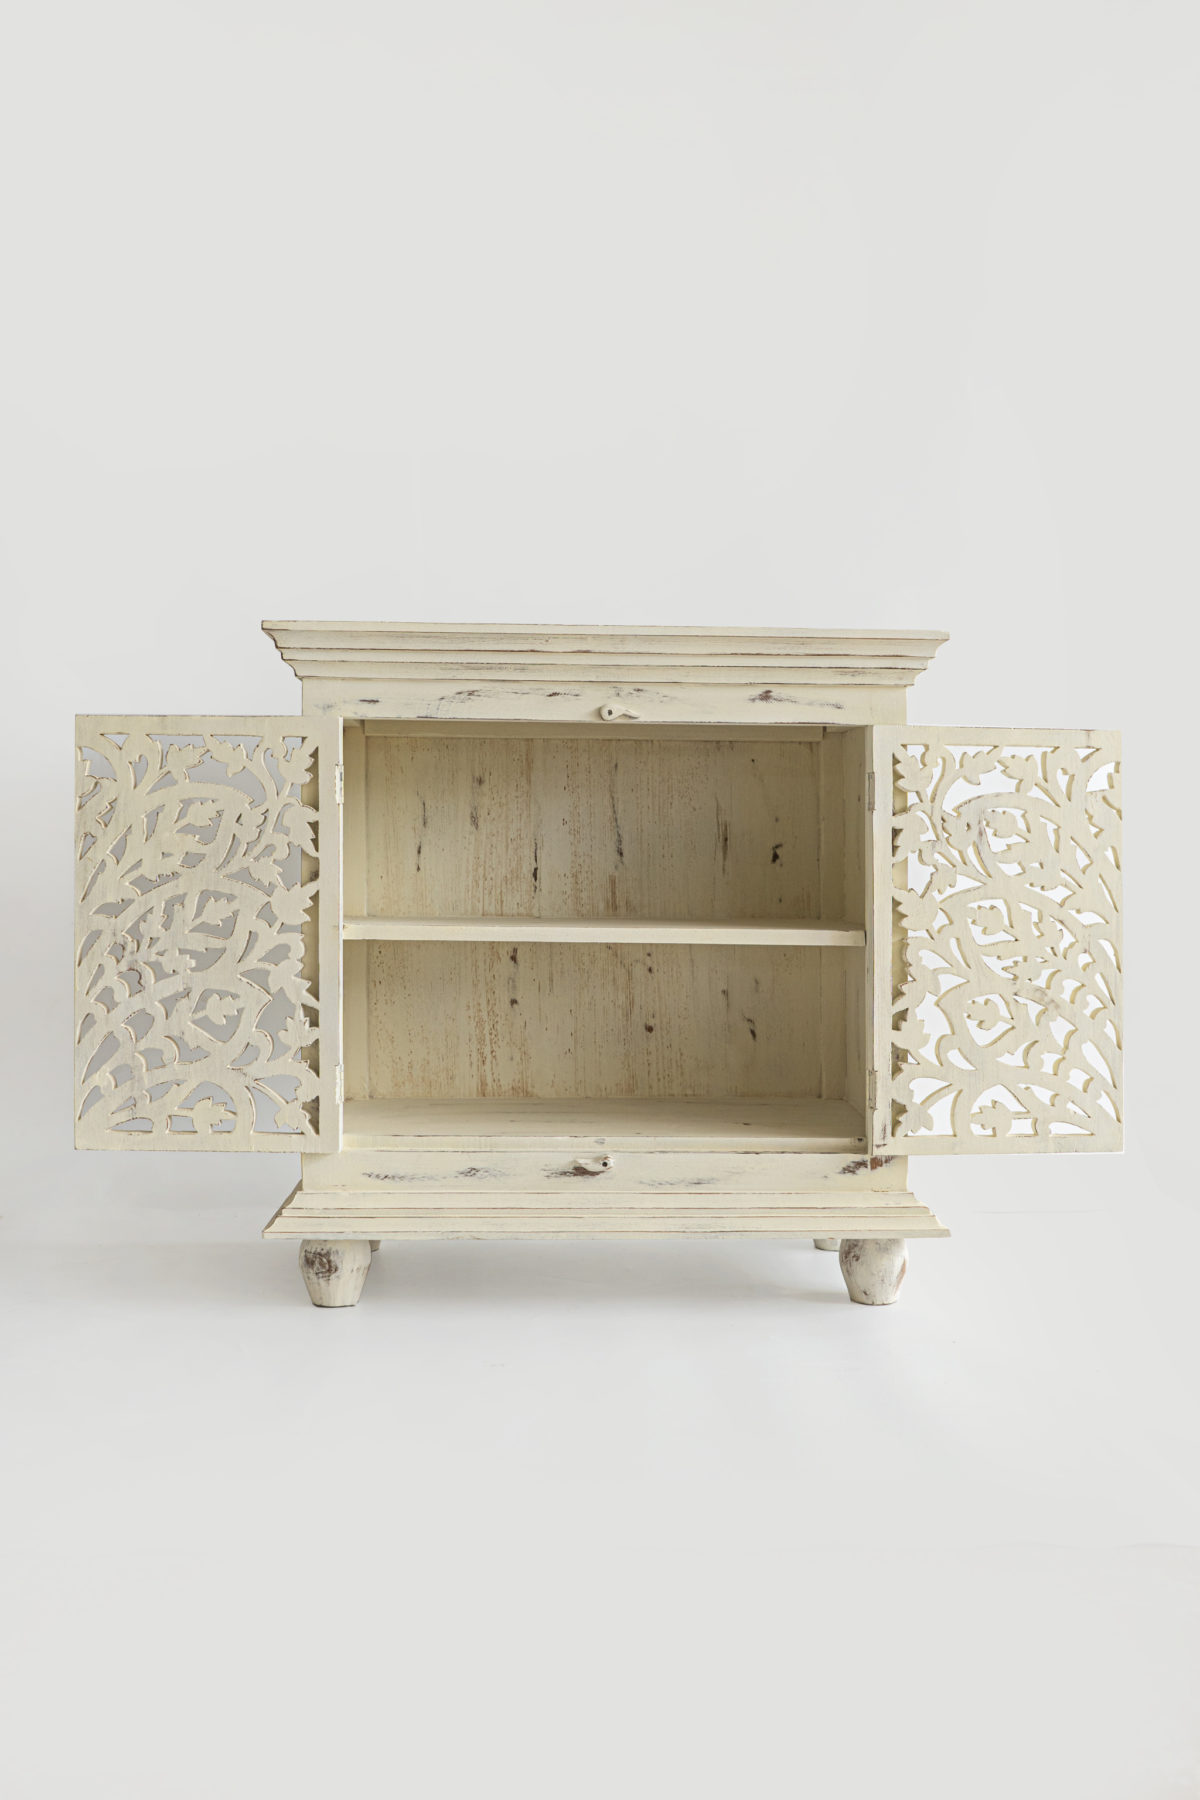 Asian furniture in wood